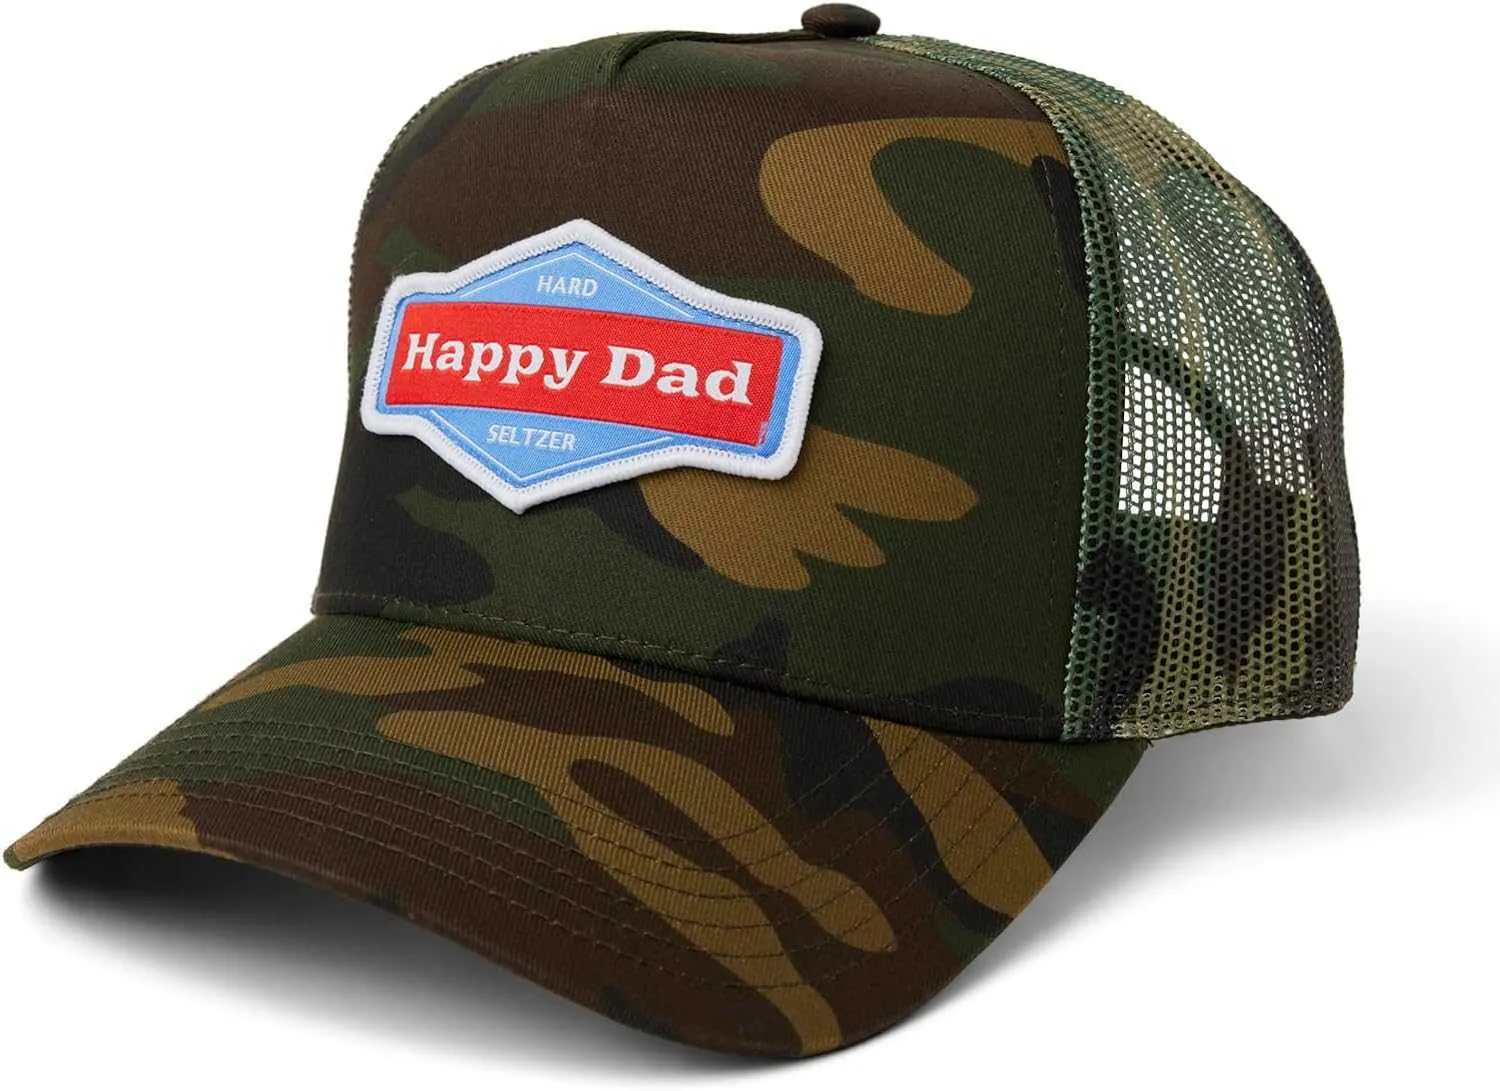 Happy Dad vrachtwagenchauffeur hoed modieuze herenhoed met ademend gaas aan de achterkant druksluiting verjaardagscadeau druksluiting hoed